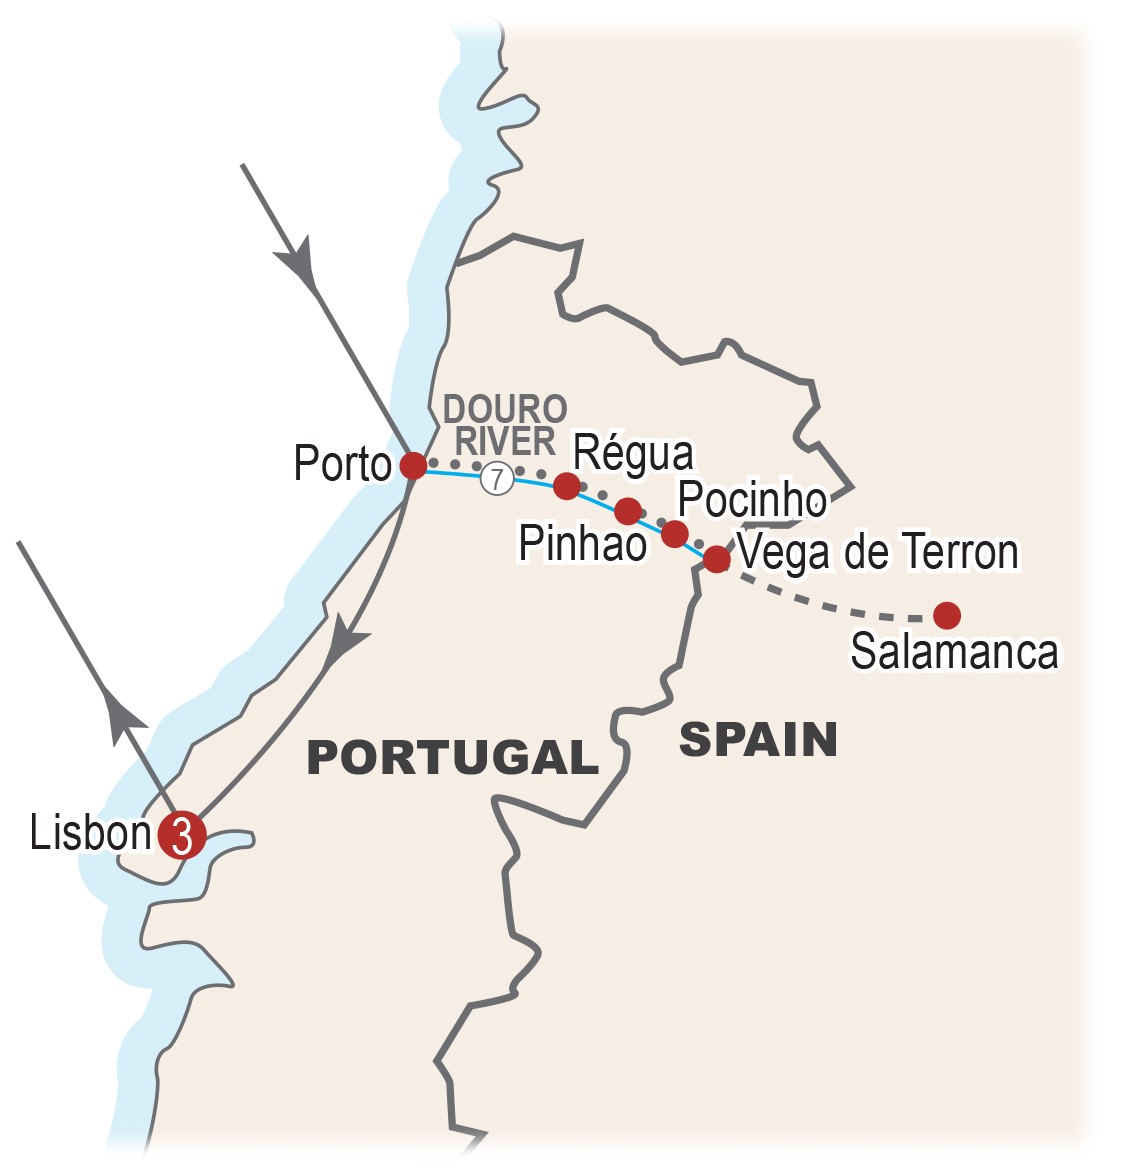 Douro_map